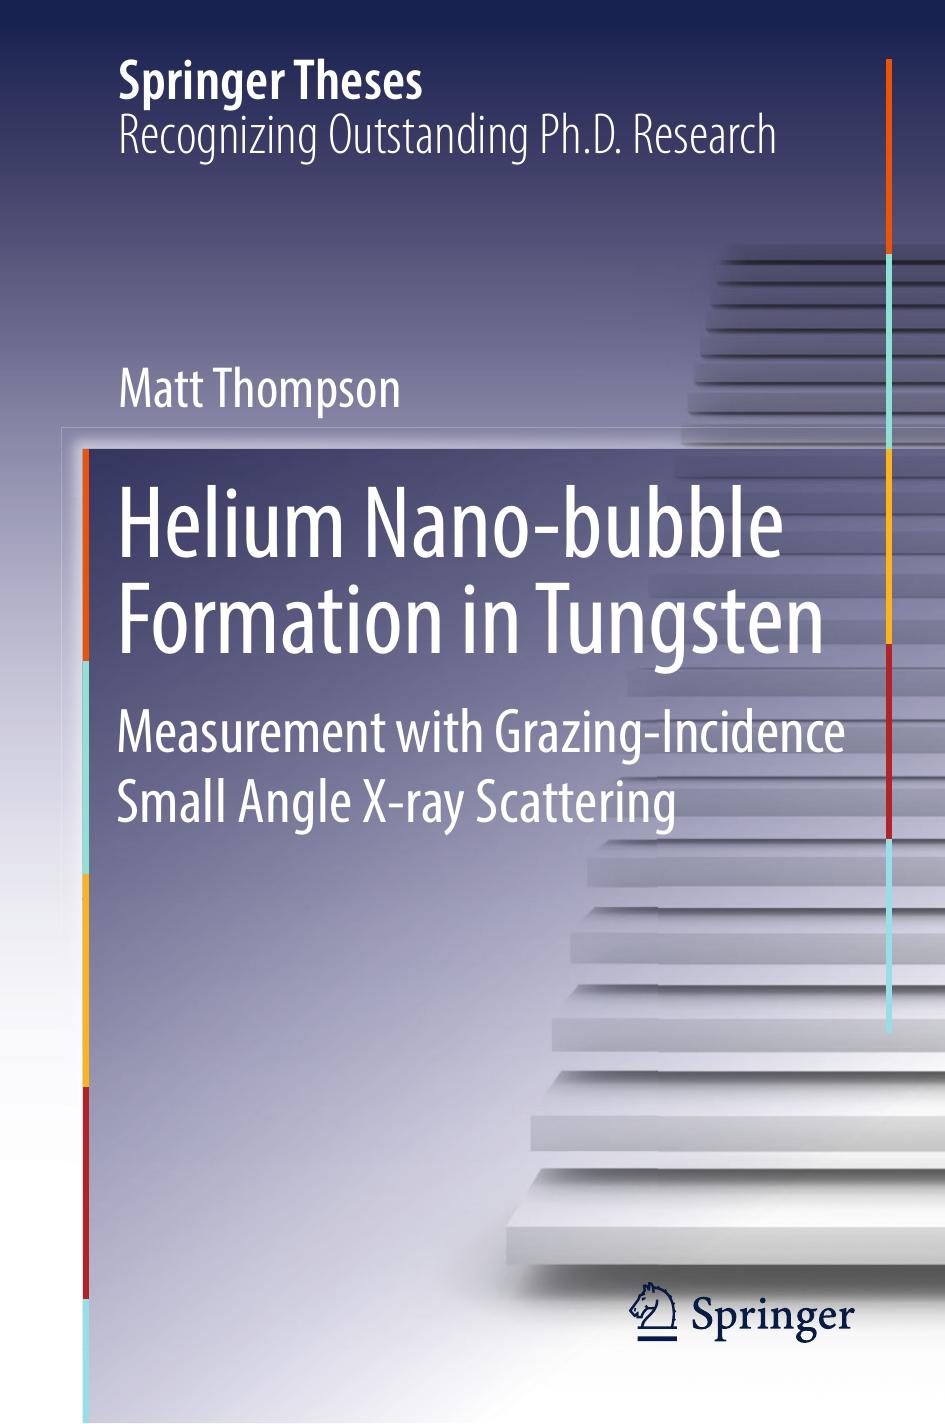 Helium Nano-bubble Formation in Tungsten by Matt Thompson